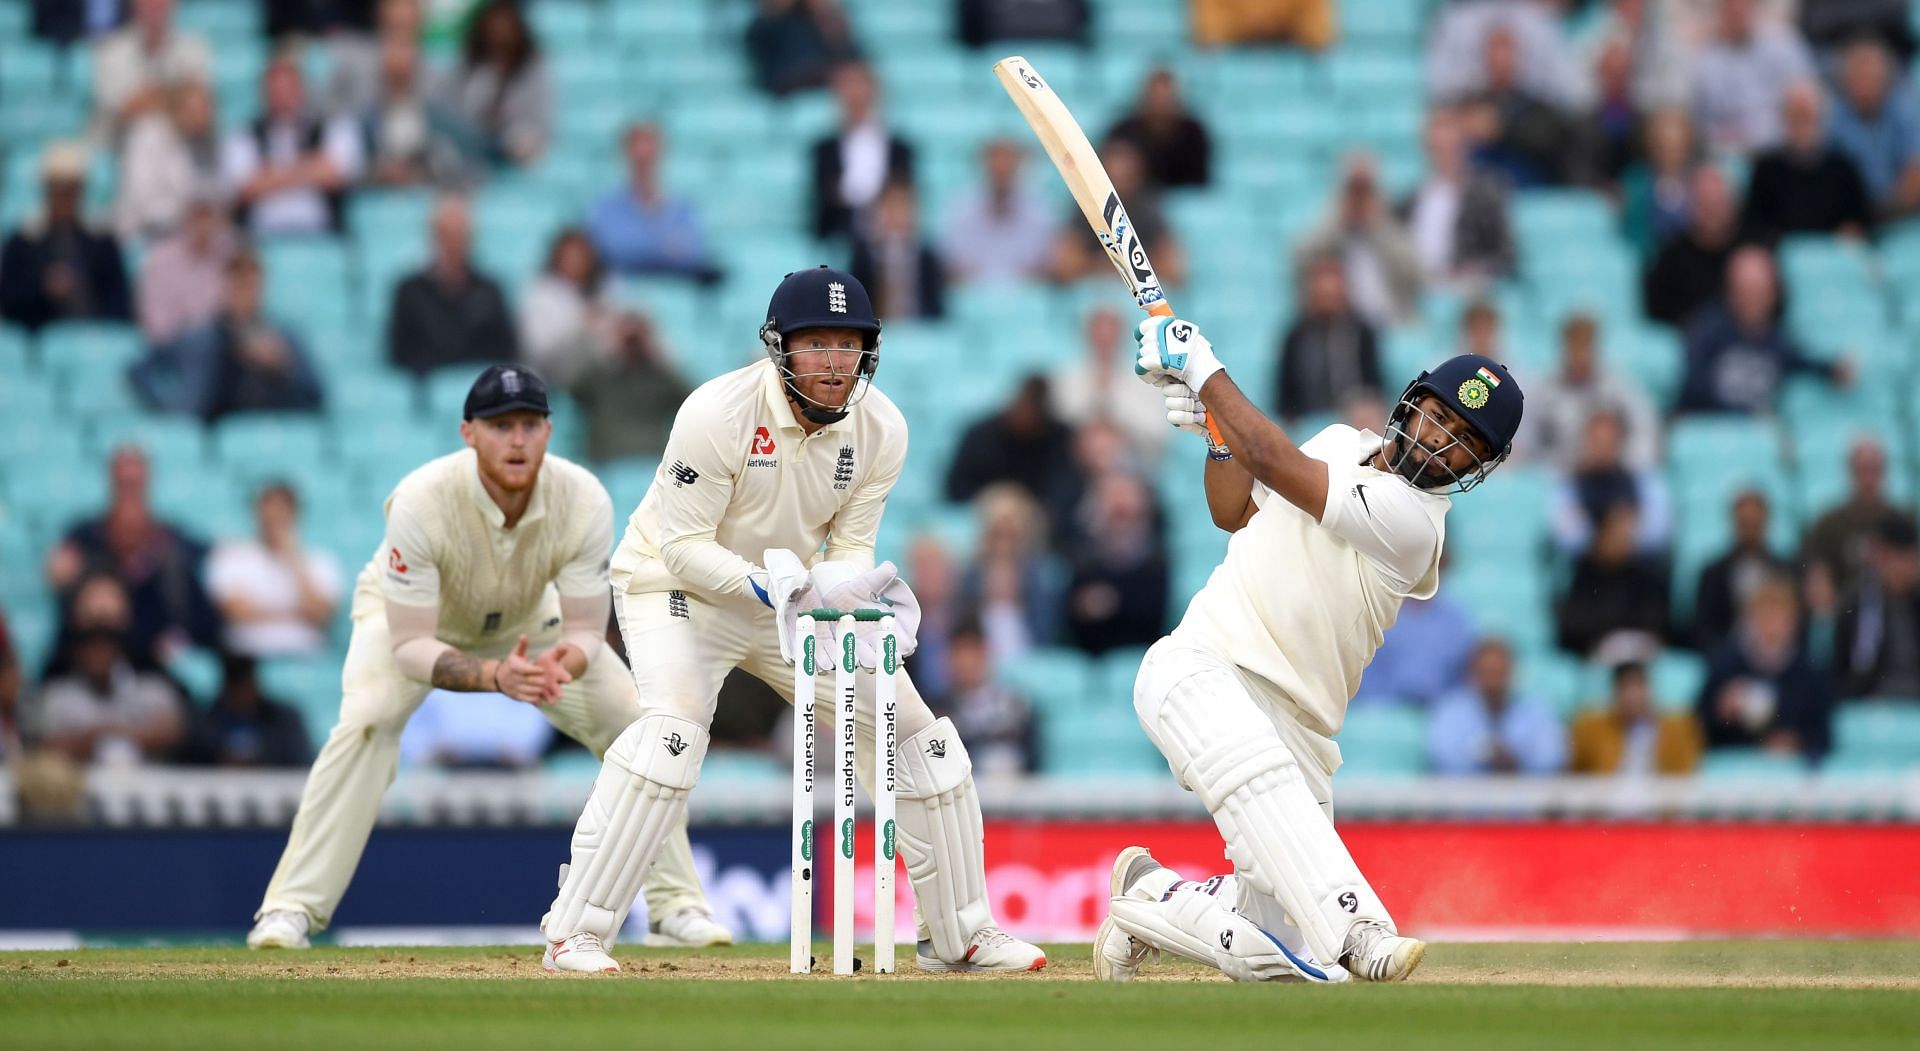 Rishabh Pant playing a slog sweep against England